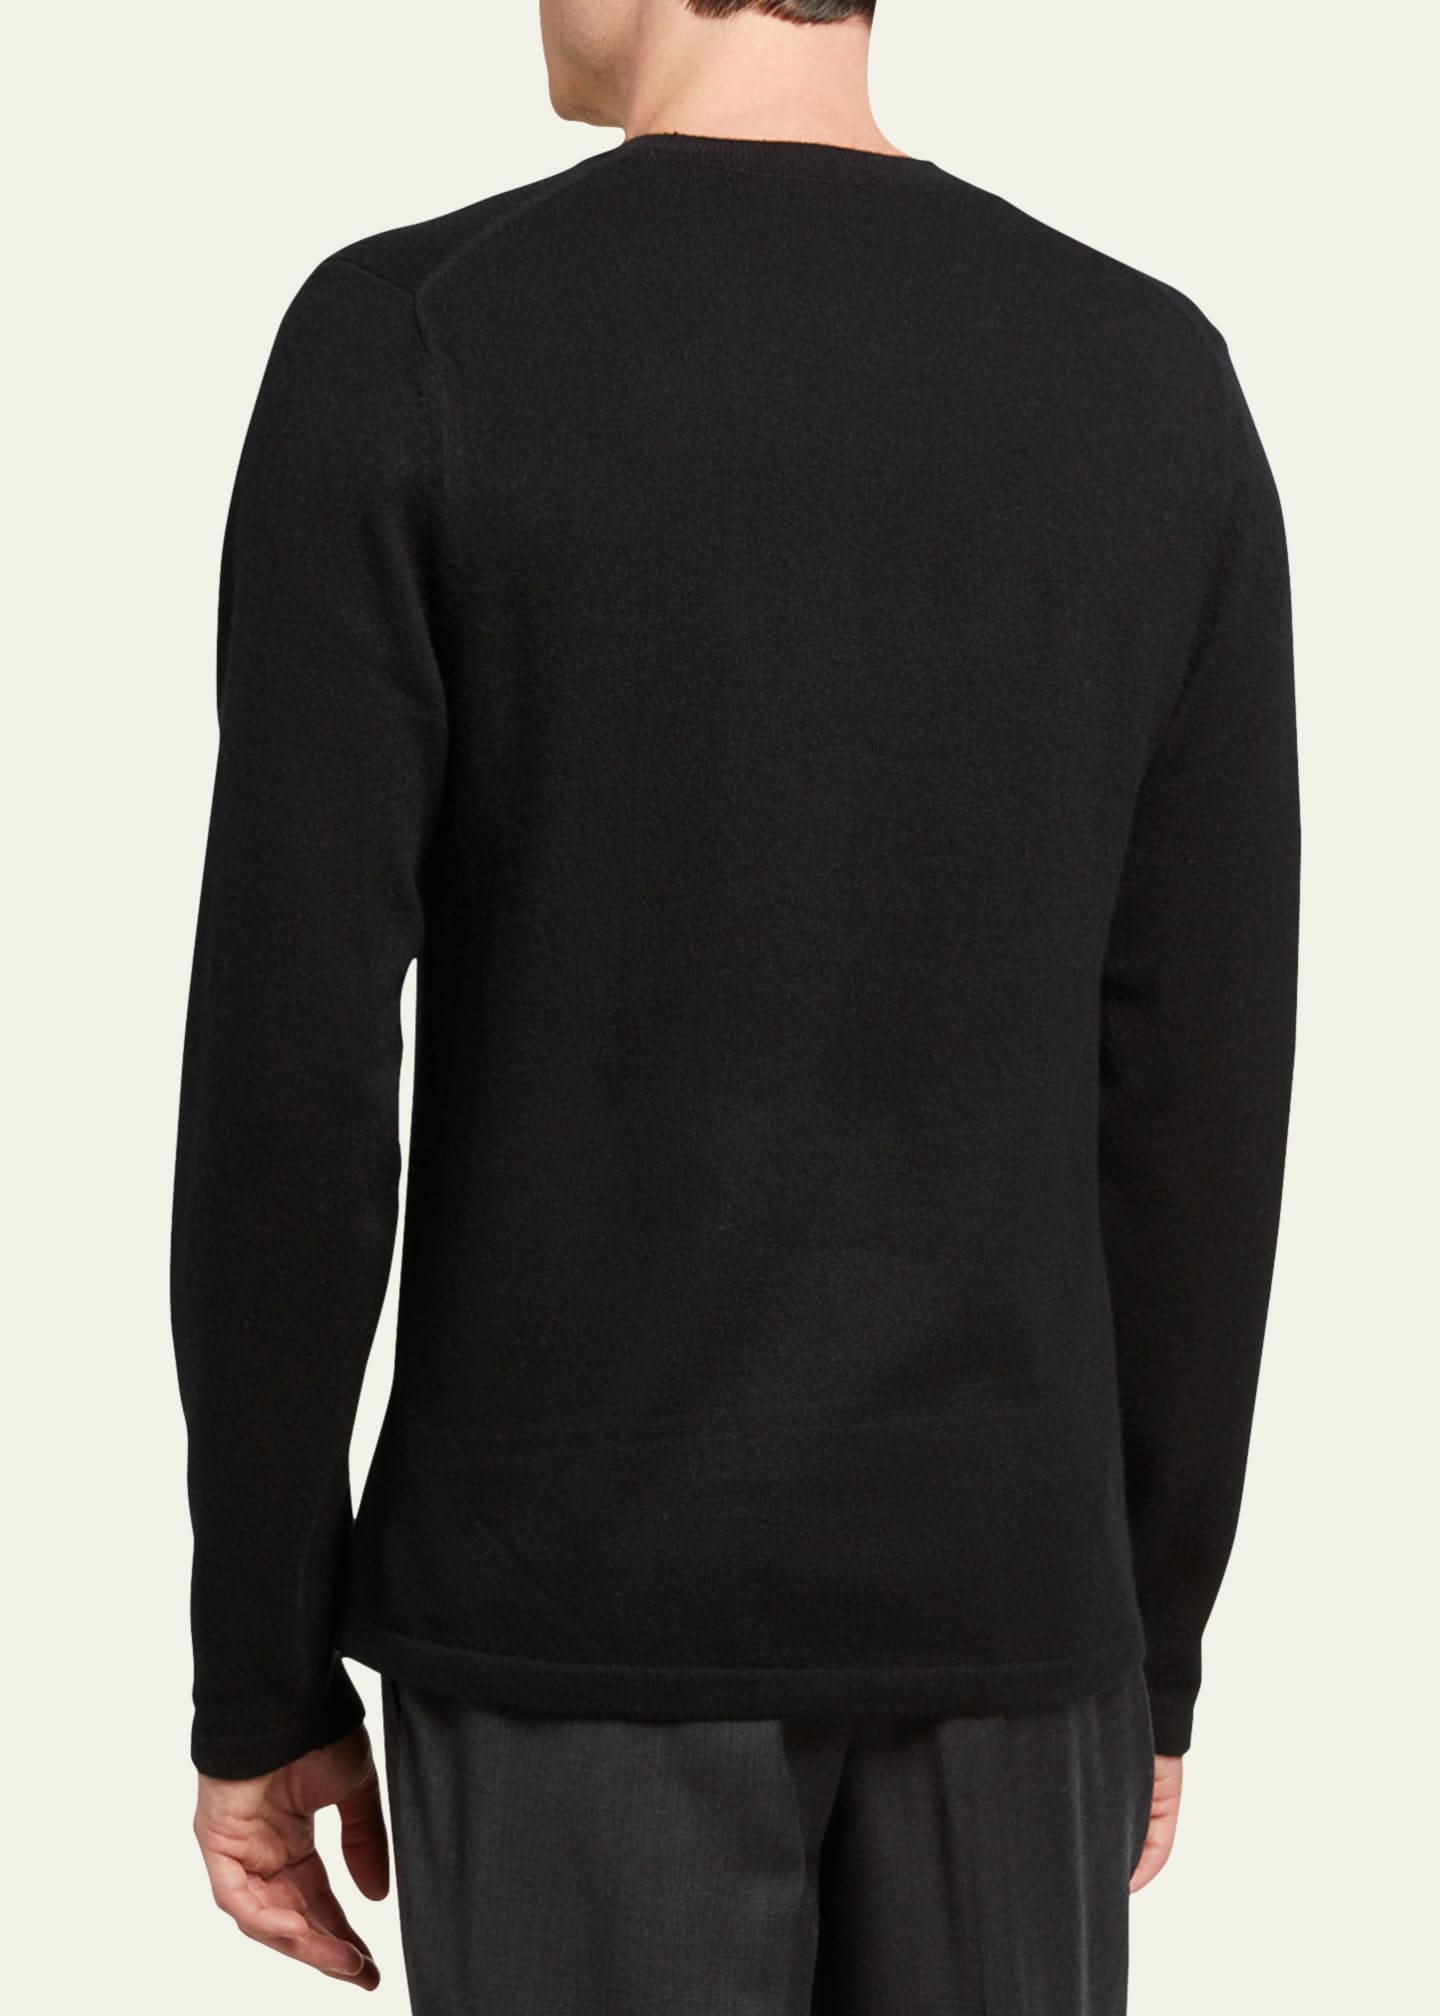 Vince Men's Cashmere Crewneck Sweater - Bergdorf Goodman